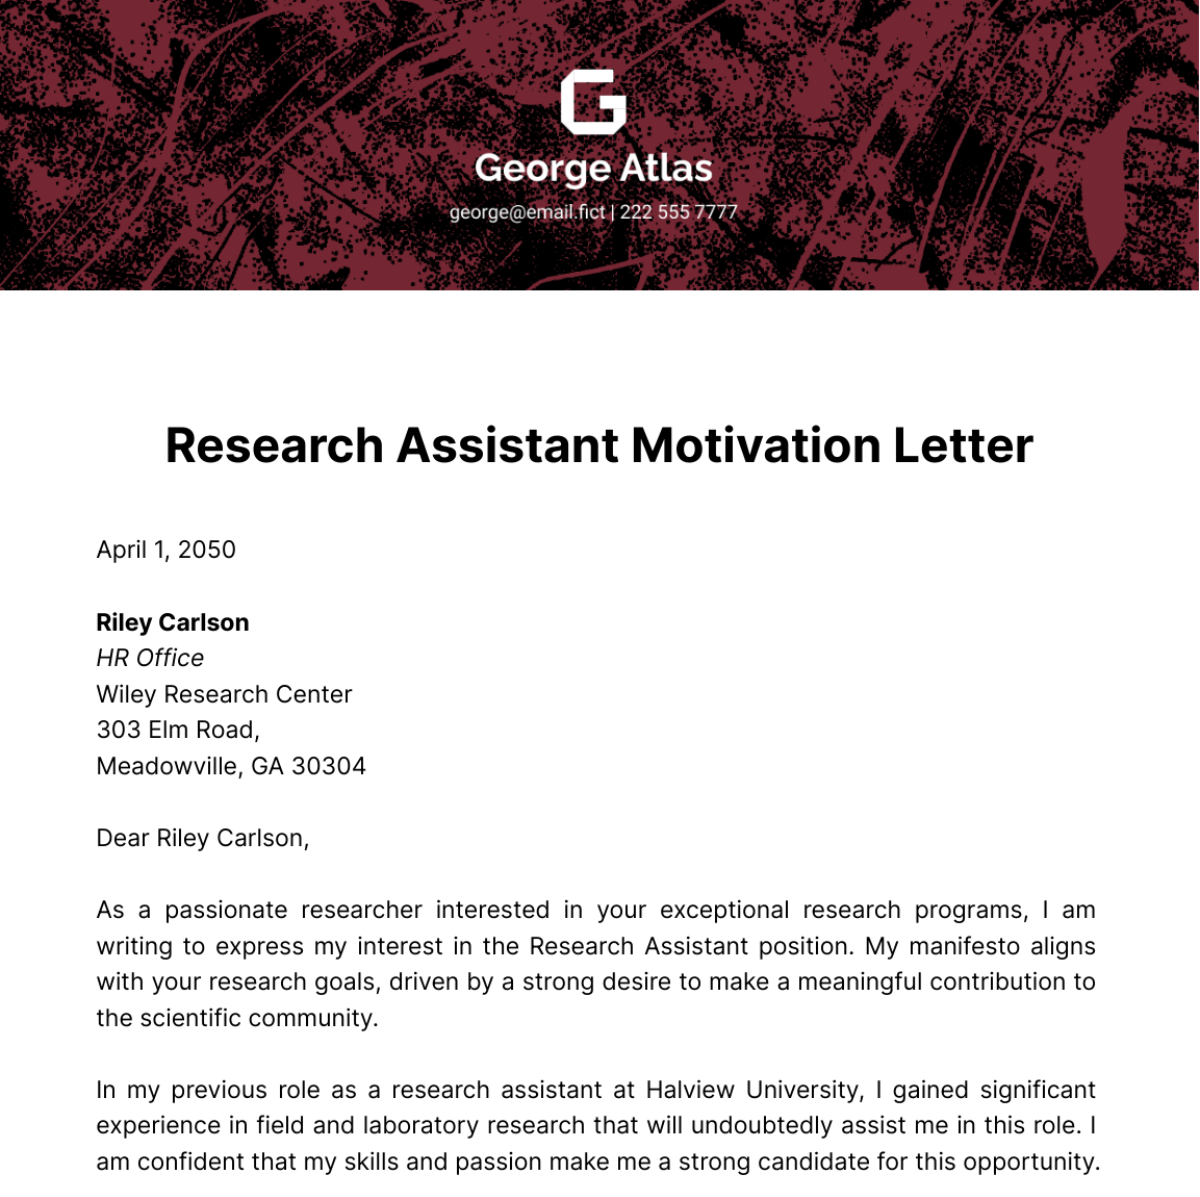 Research Assistant Motivation Letter Template